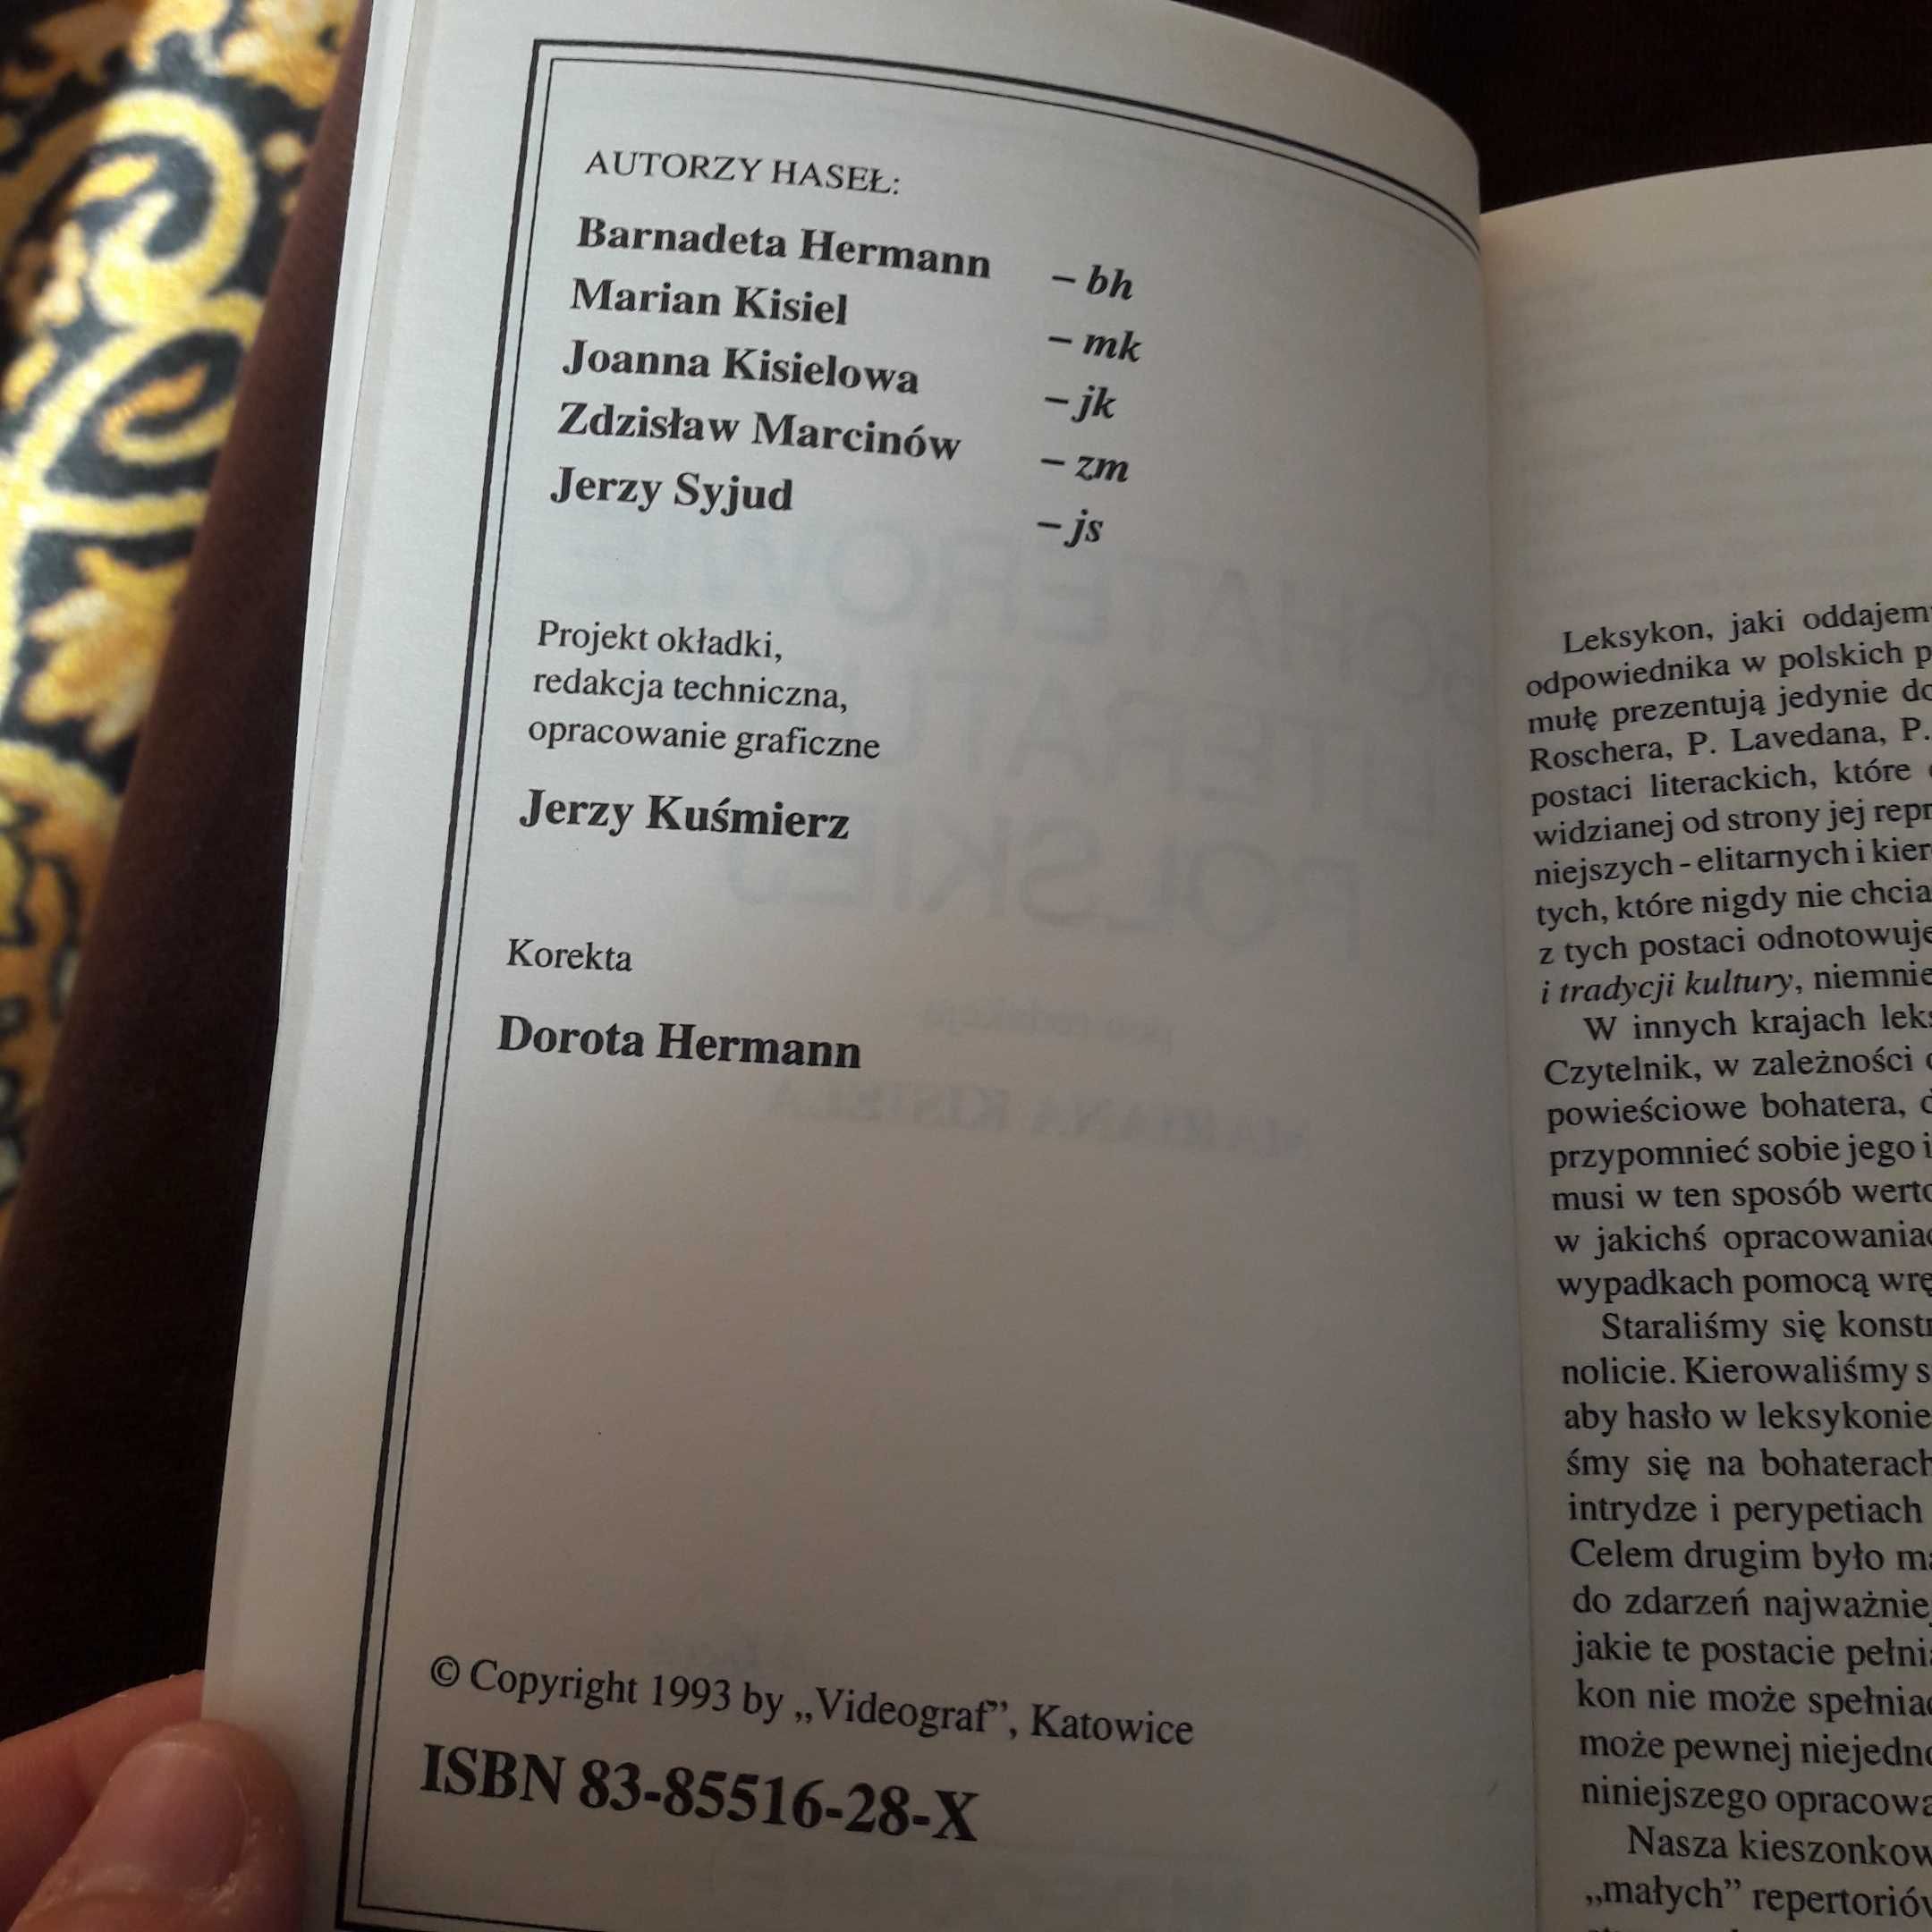 Kieszonkowa encyklopedia literatury i sztuki